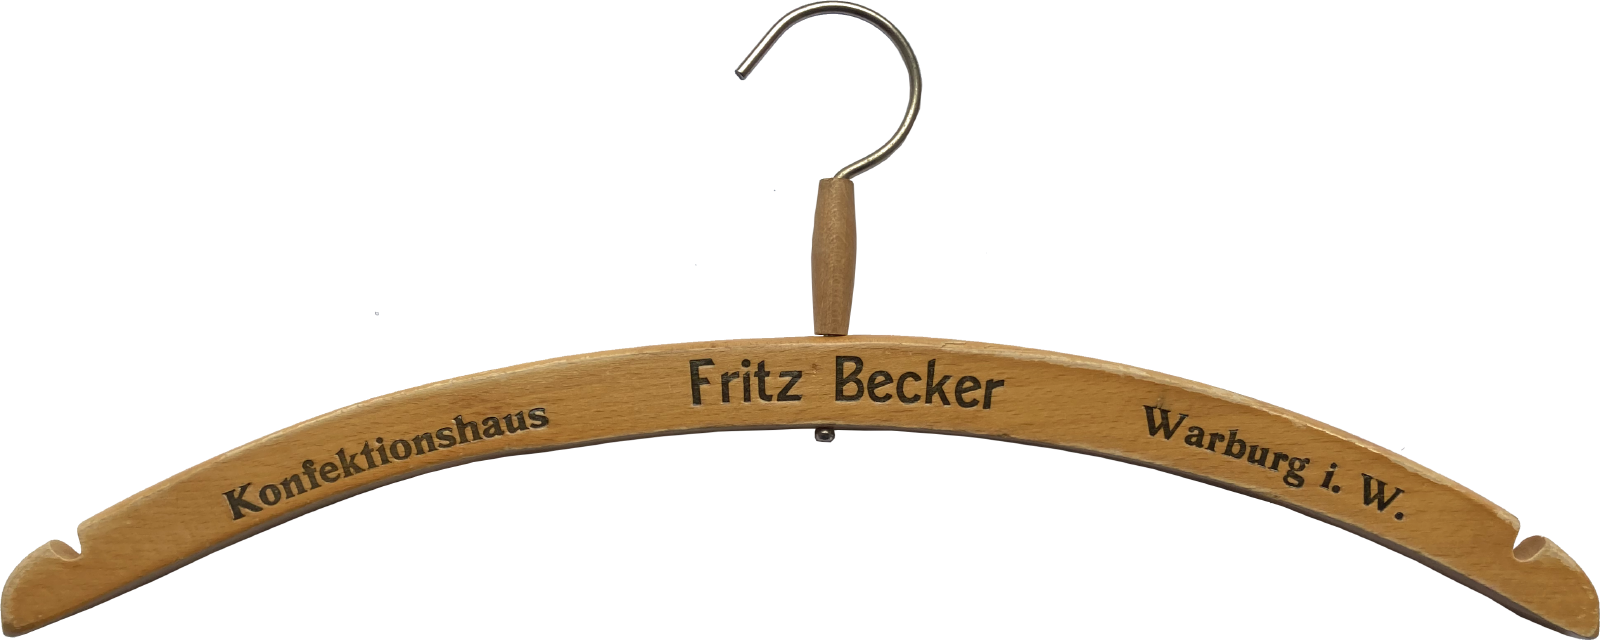 Konfenktionshaus Fritz Becker Warburg i. W.